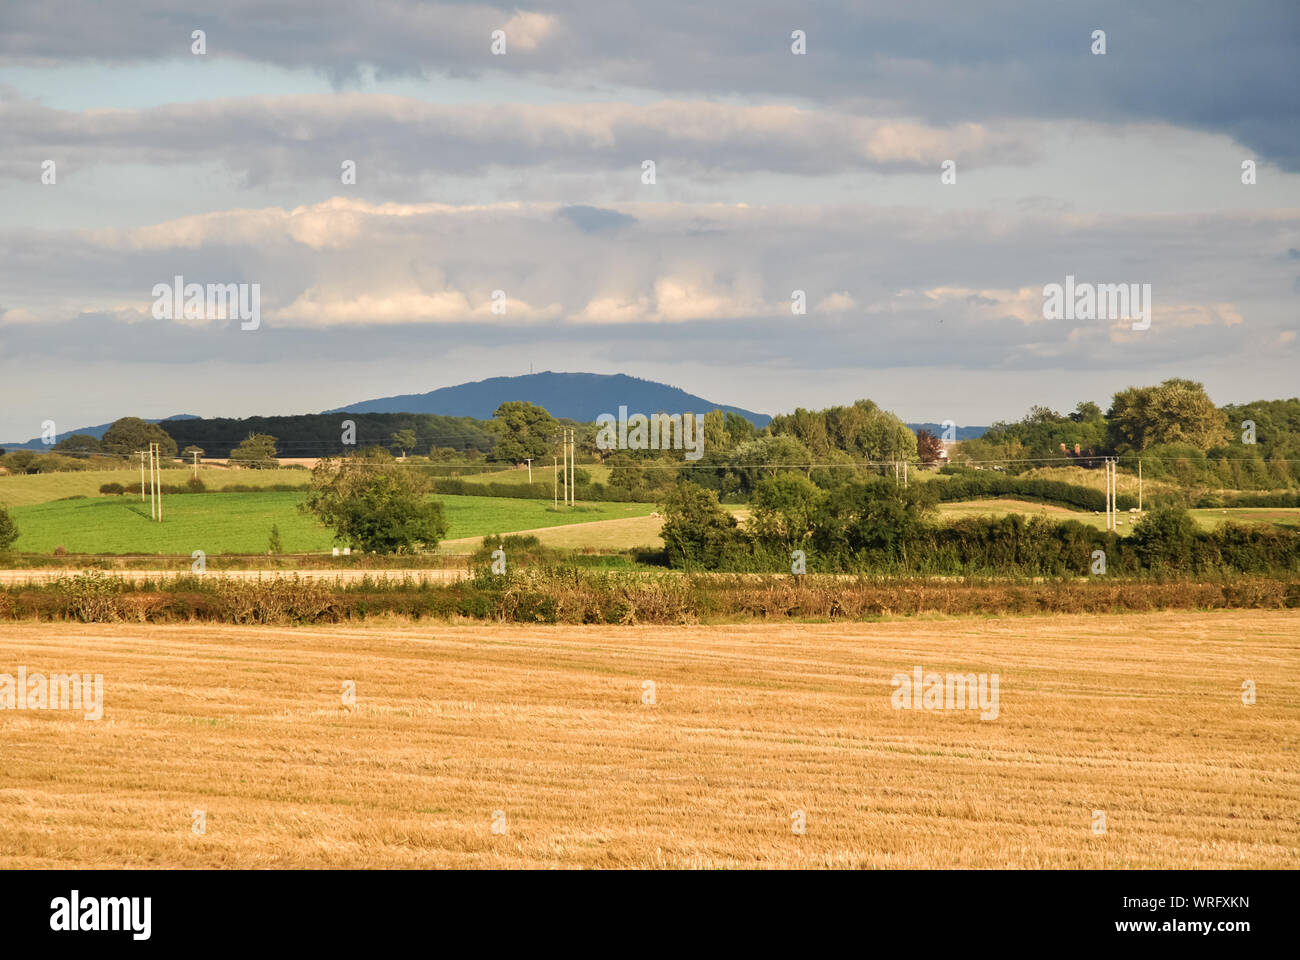 Una escena rural mostrando el Wrekin Hill, en el fondo, Shropshire, RU Foto de stock